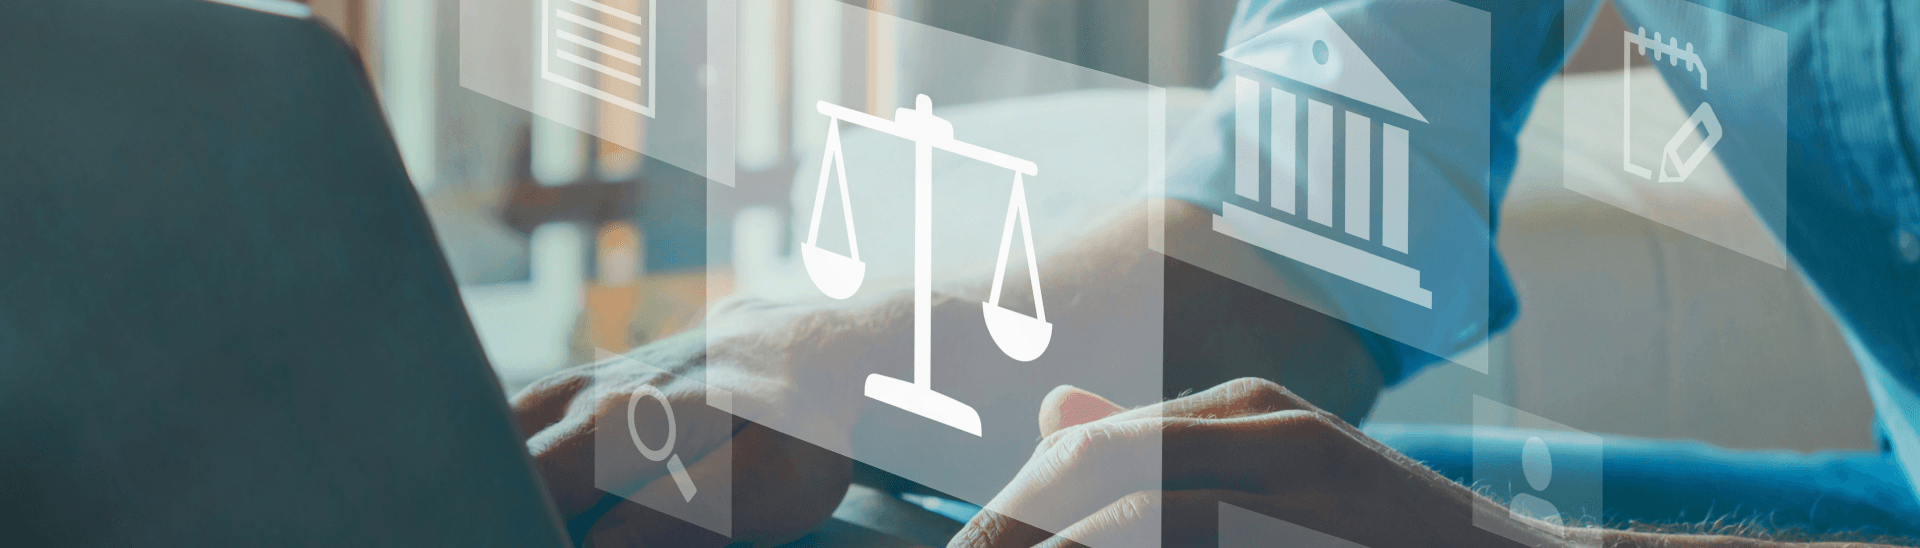 Azure API Management & UDC helps US Courts manage hearings seamlessly 